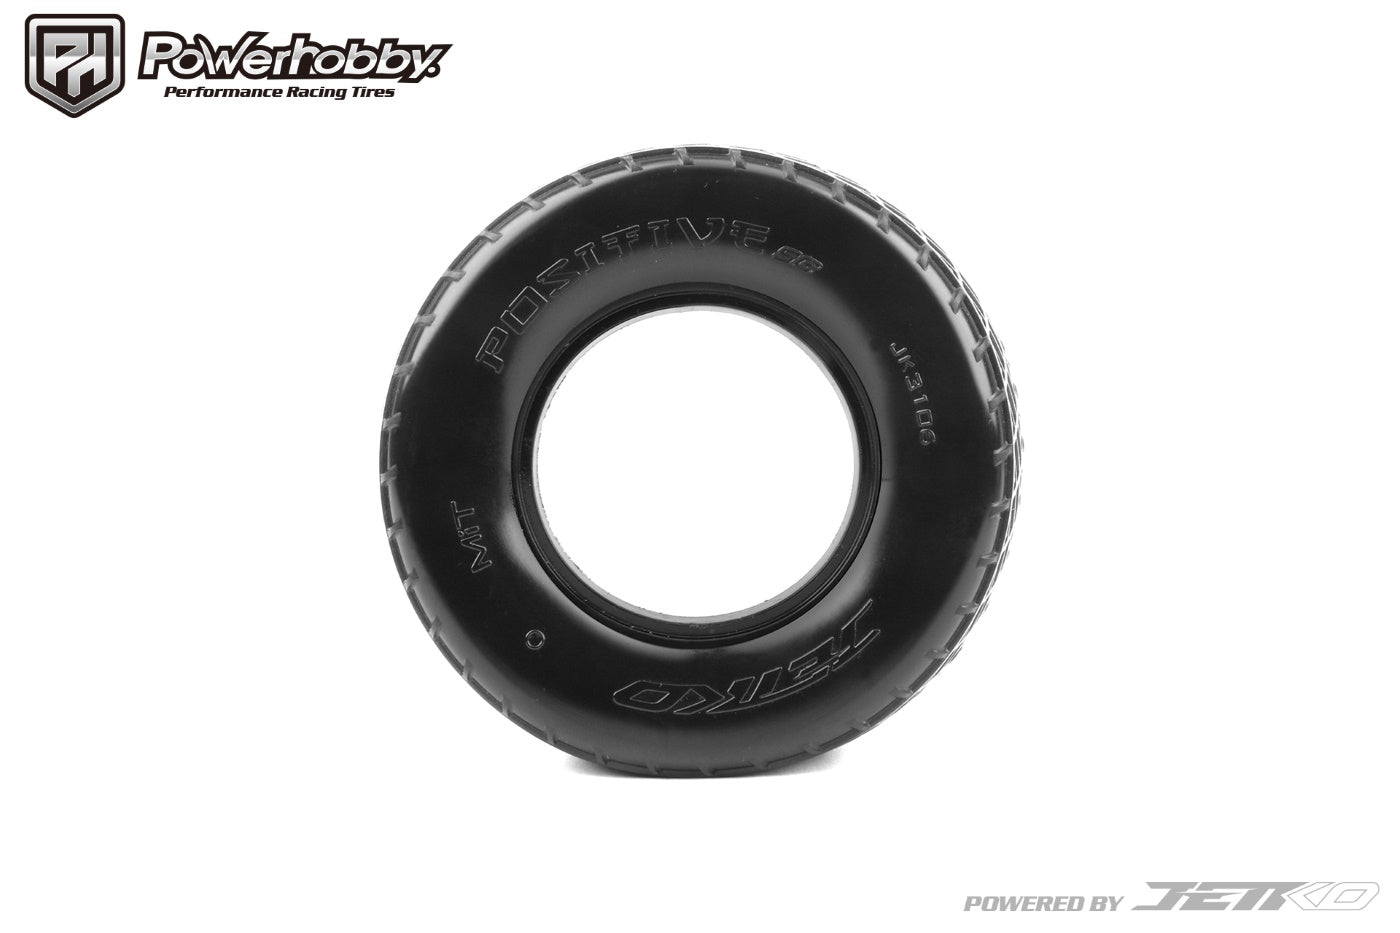 Powerhobby SC-Positive Short Course Tires Super Soft.